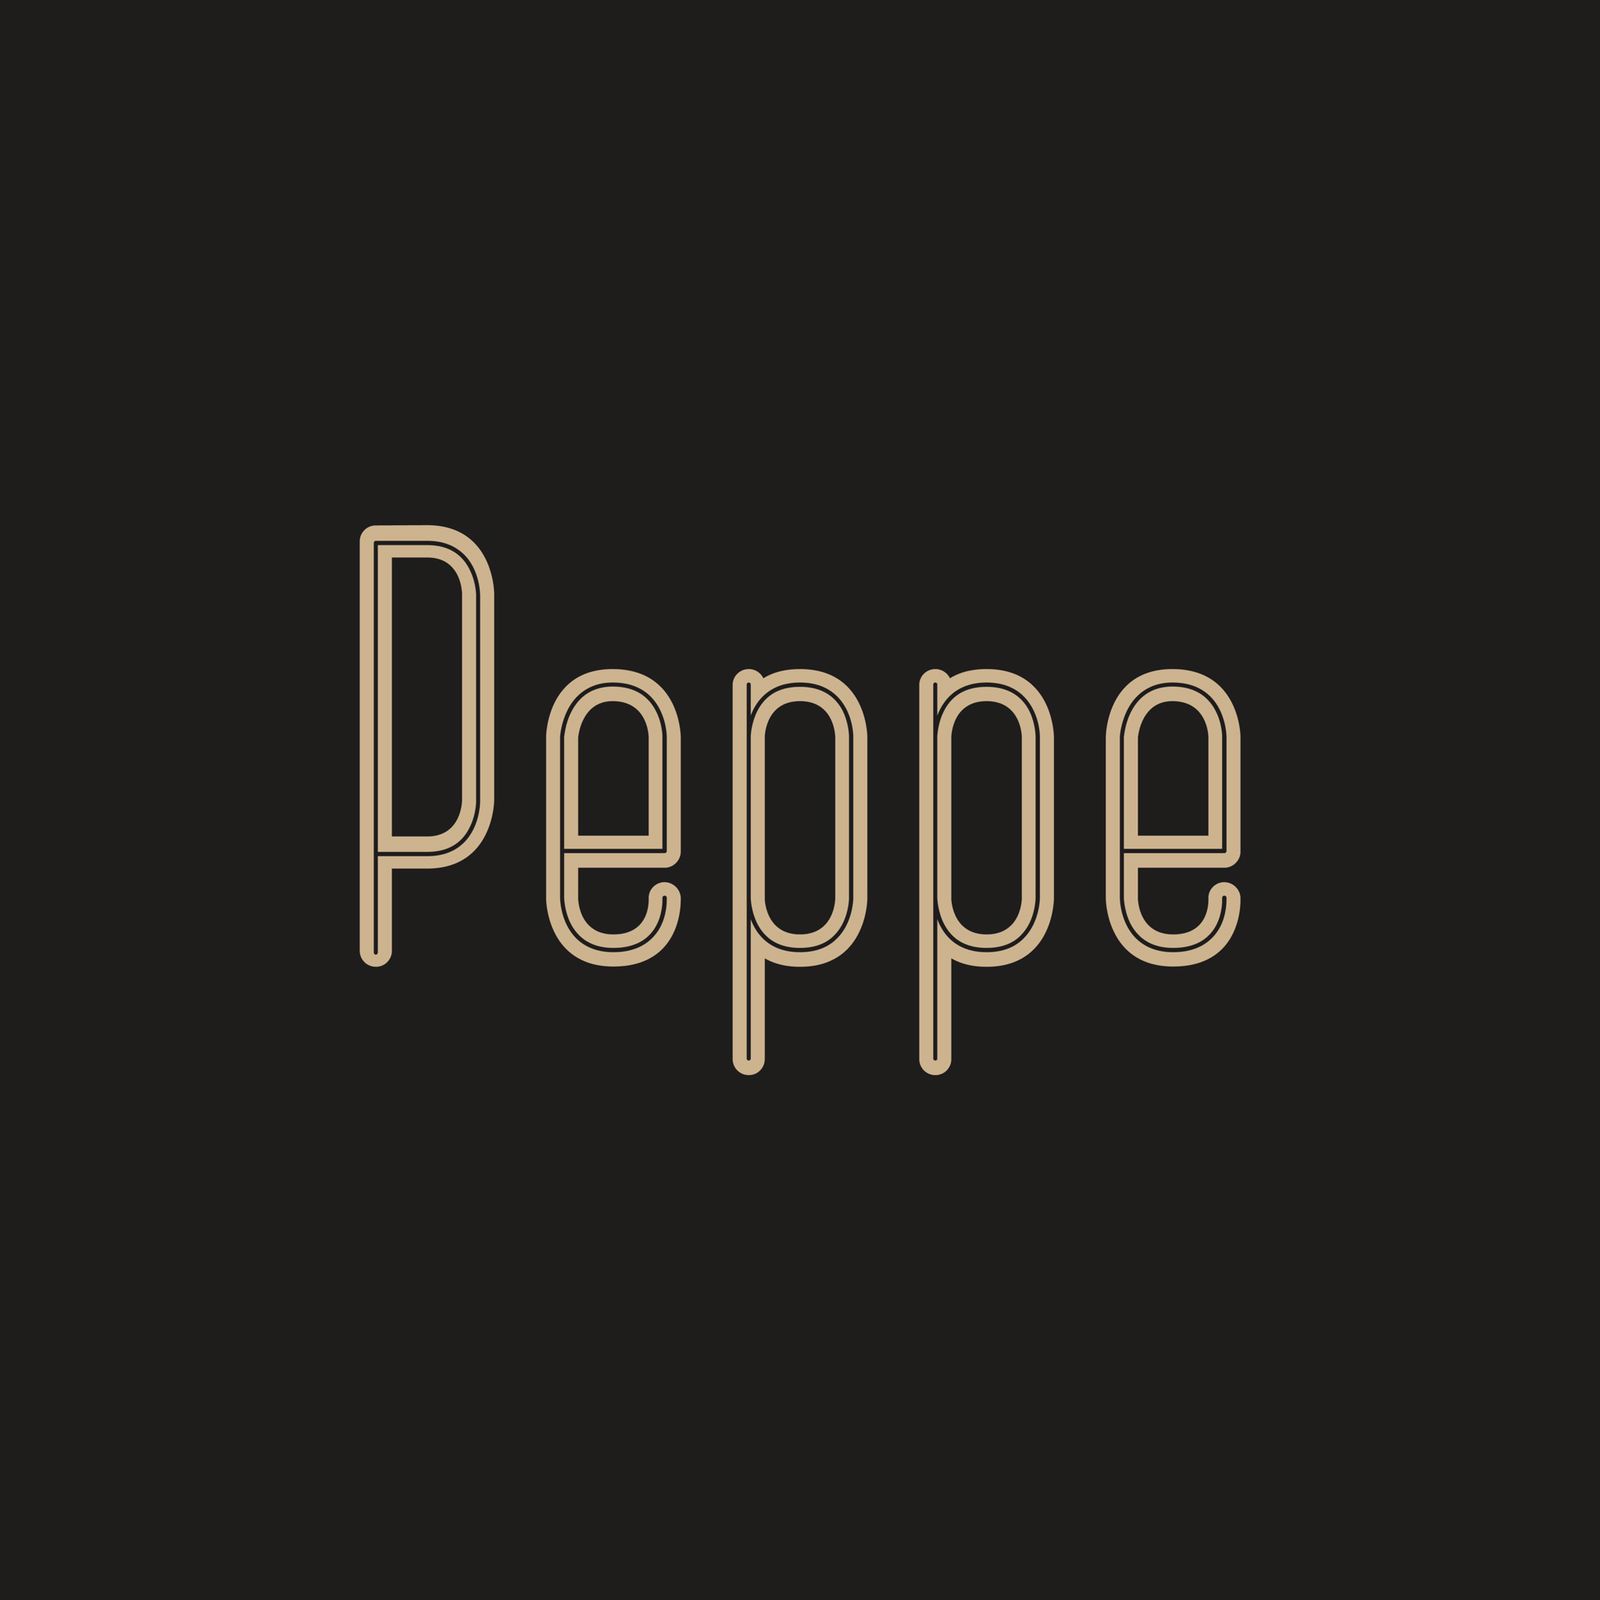 Peppe Restaurante